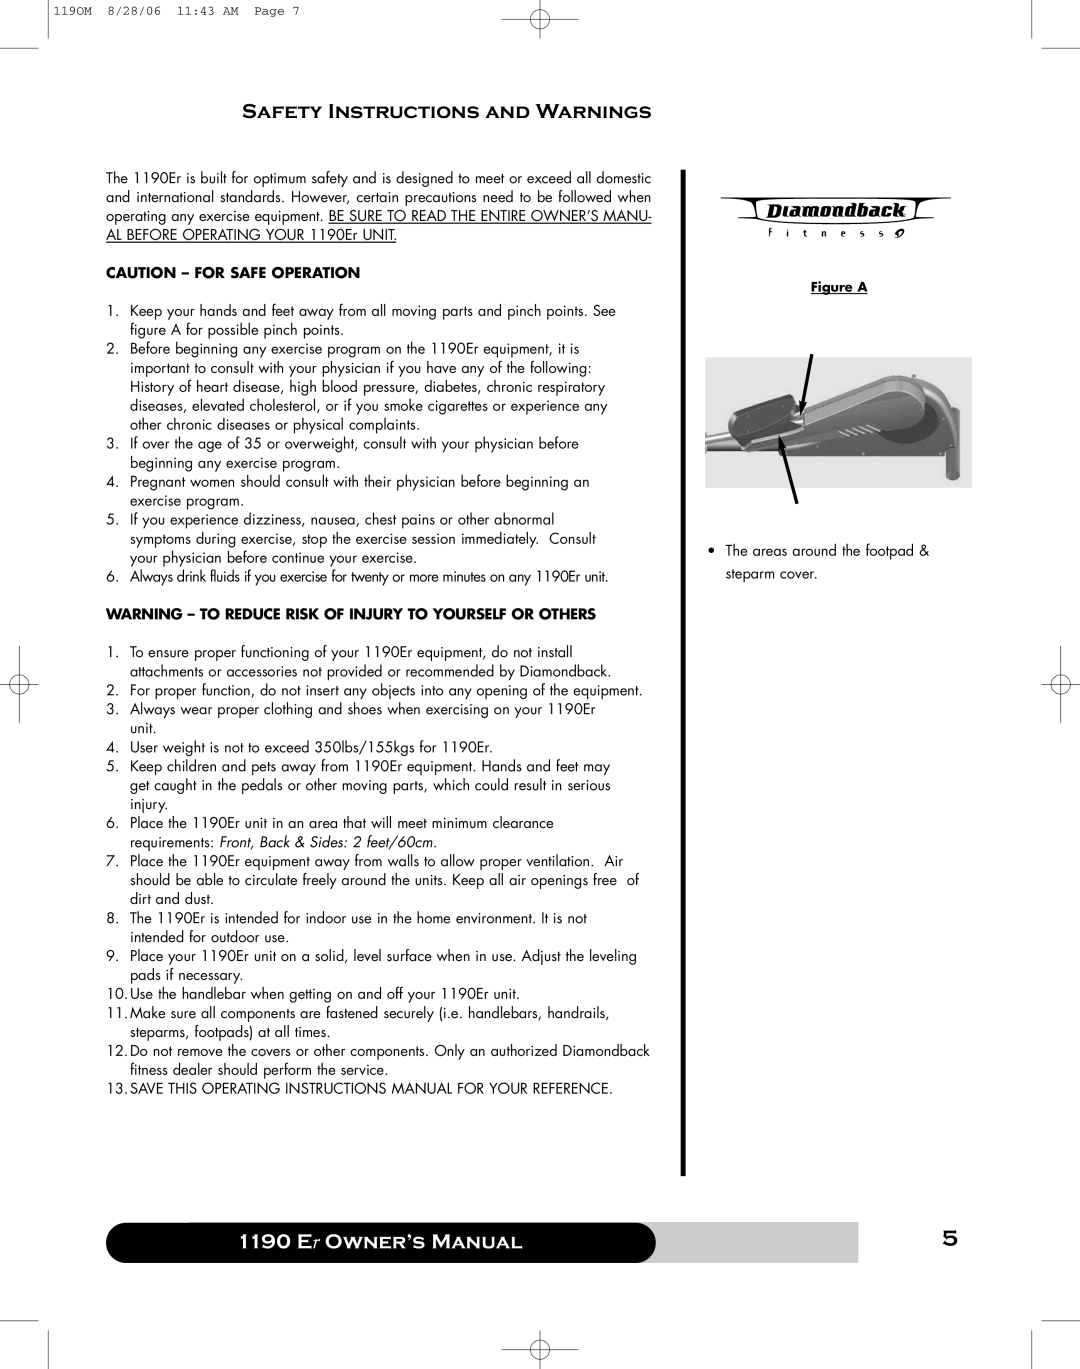 Diamondback 1190 Er manual Safety Instructions and Warnings, Er Owner’s Manual, Caution - For Safe Operation 